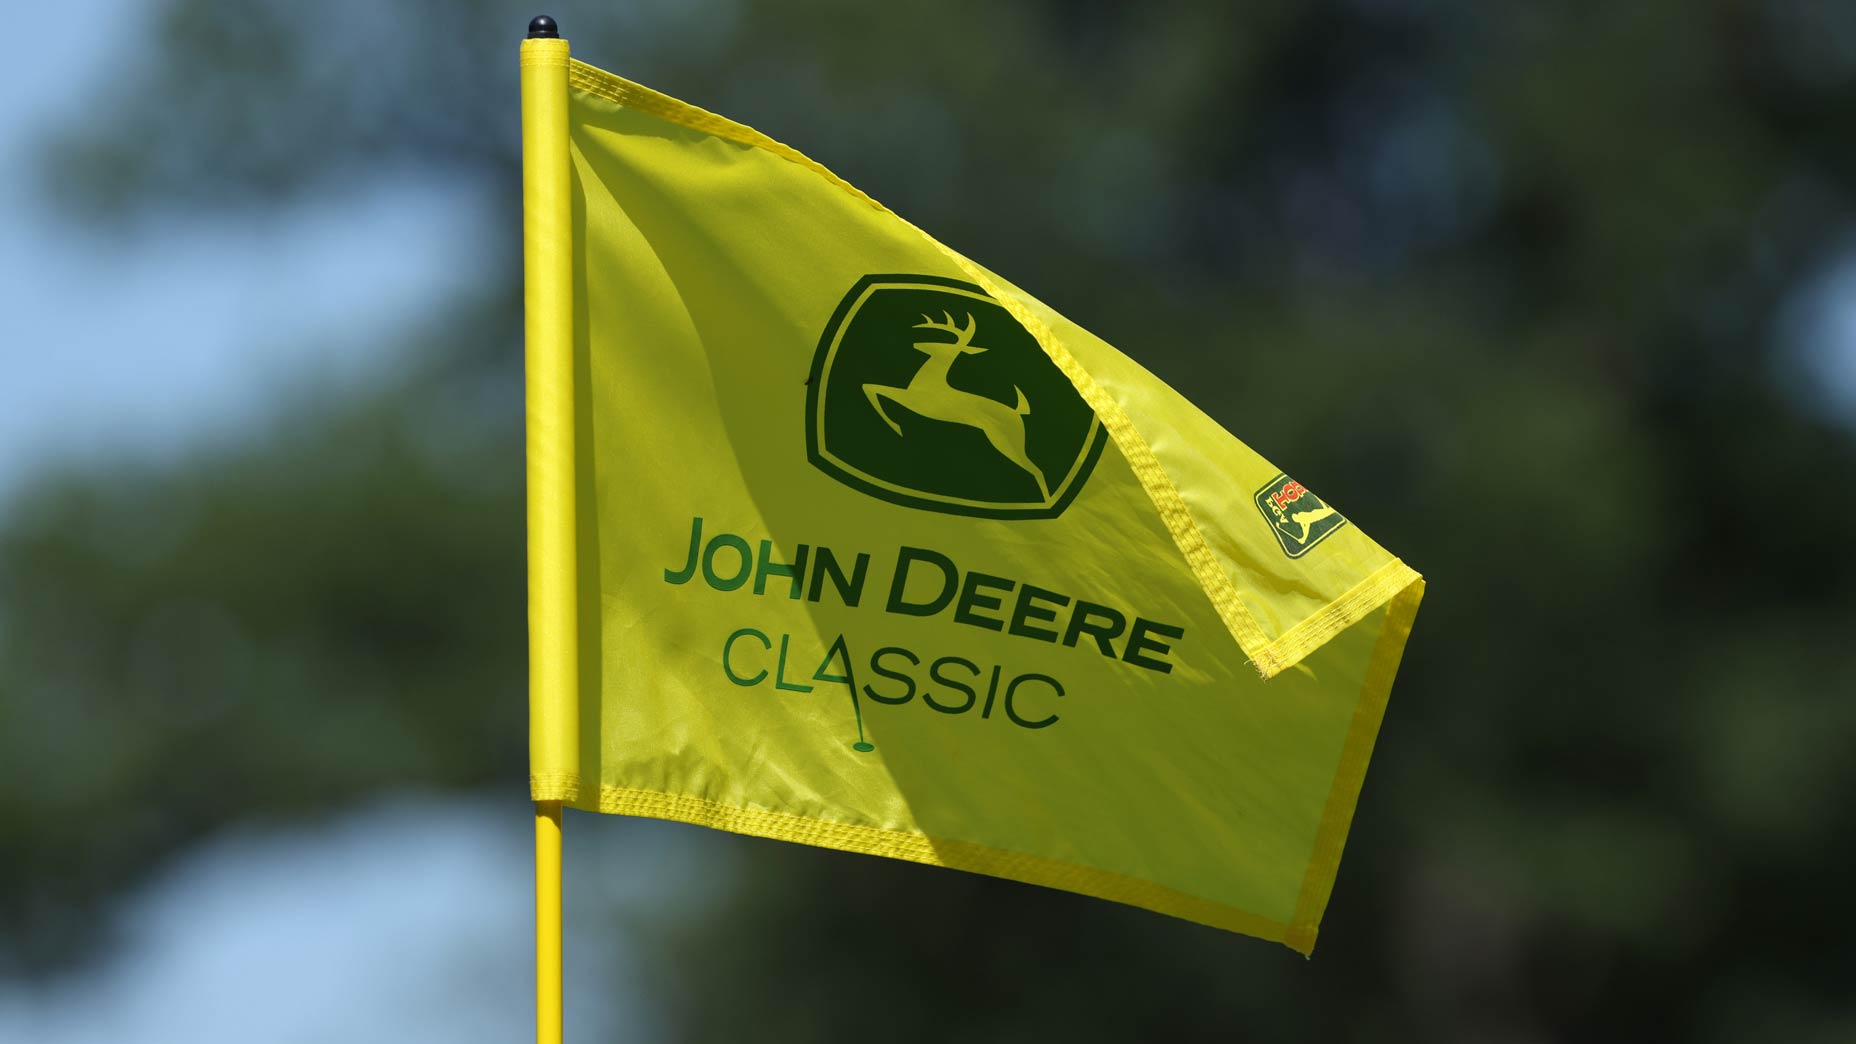 John Deere Classic flag seen at tournament